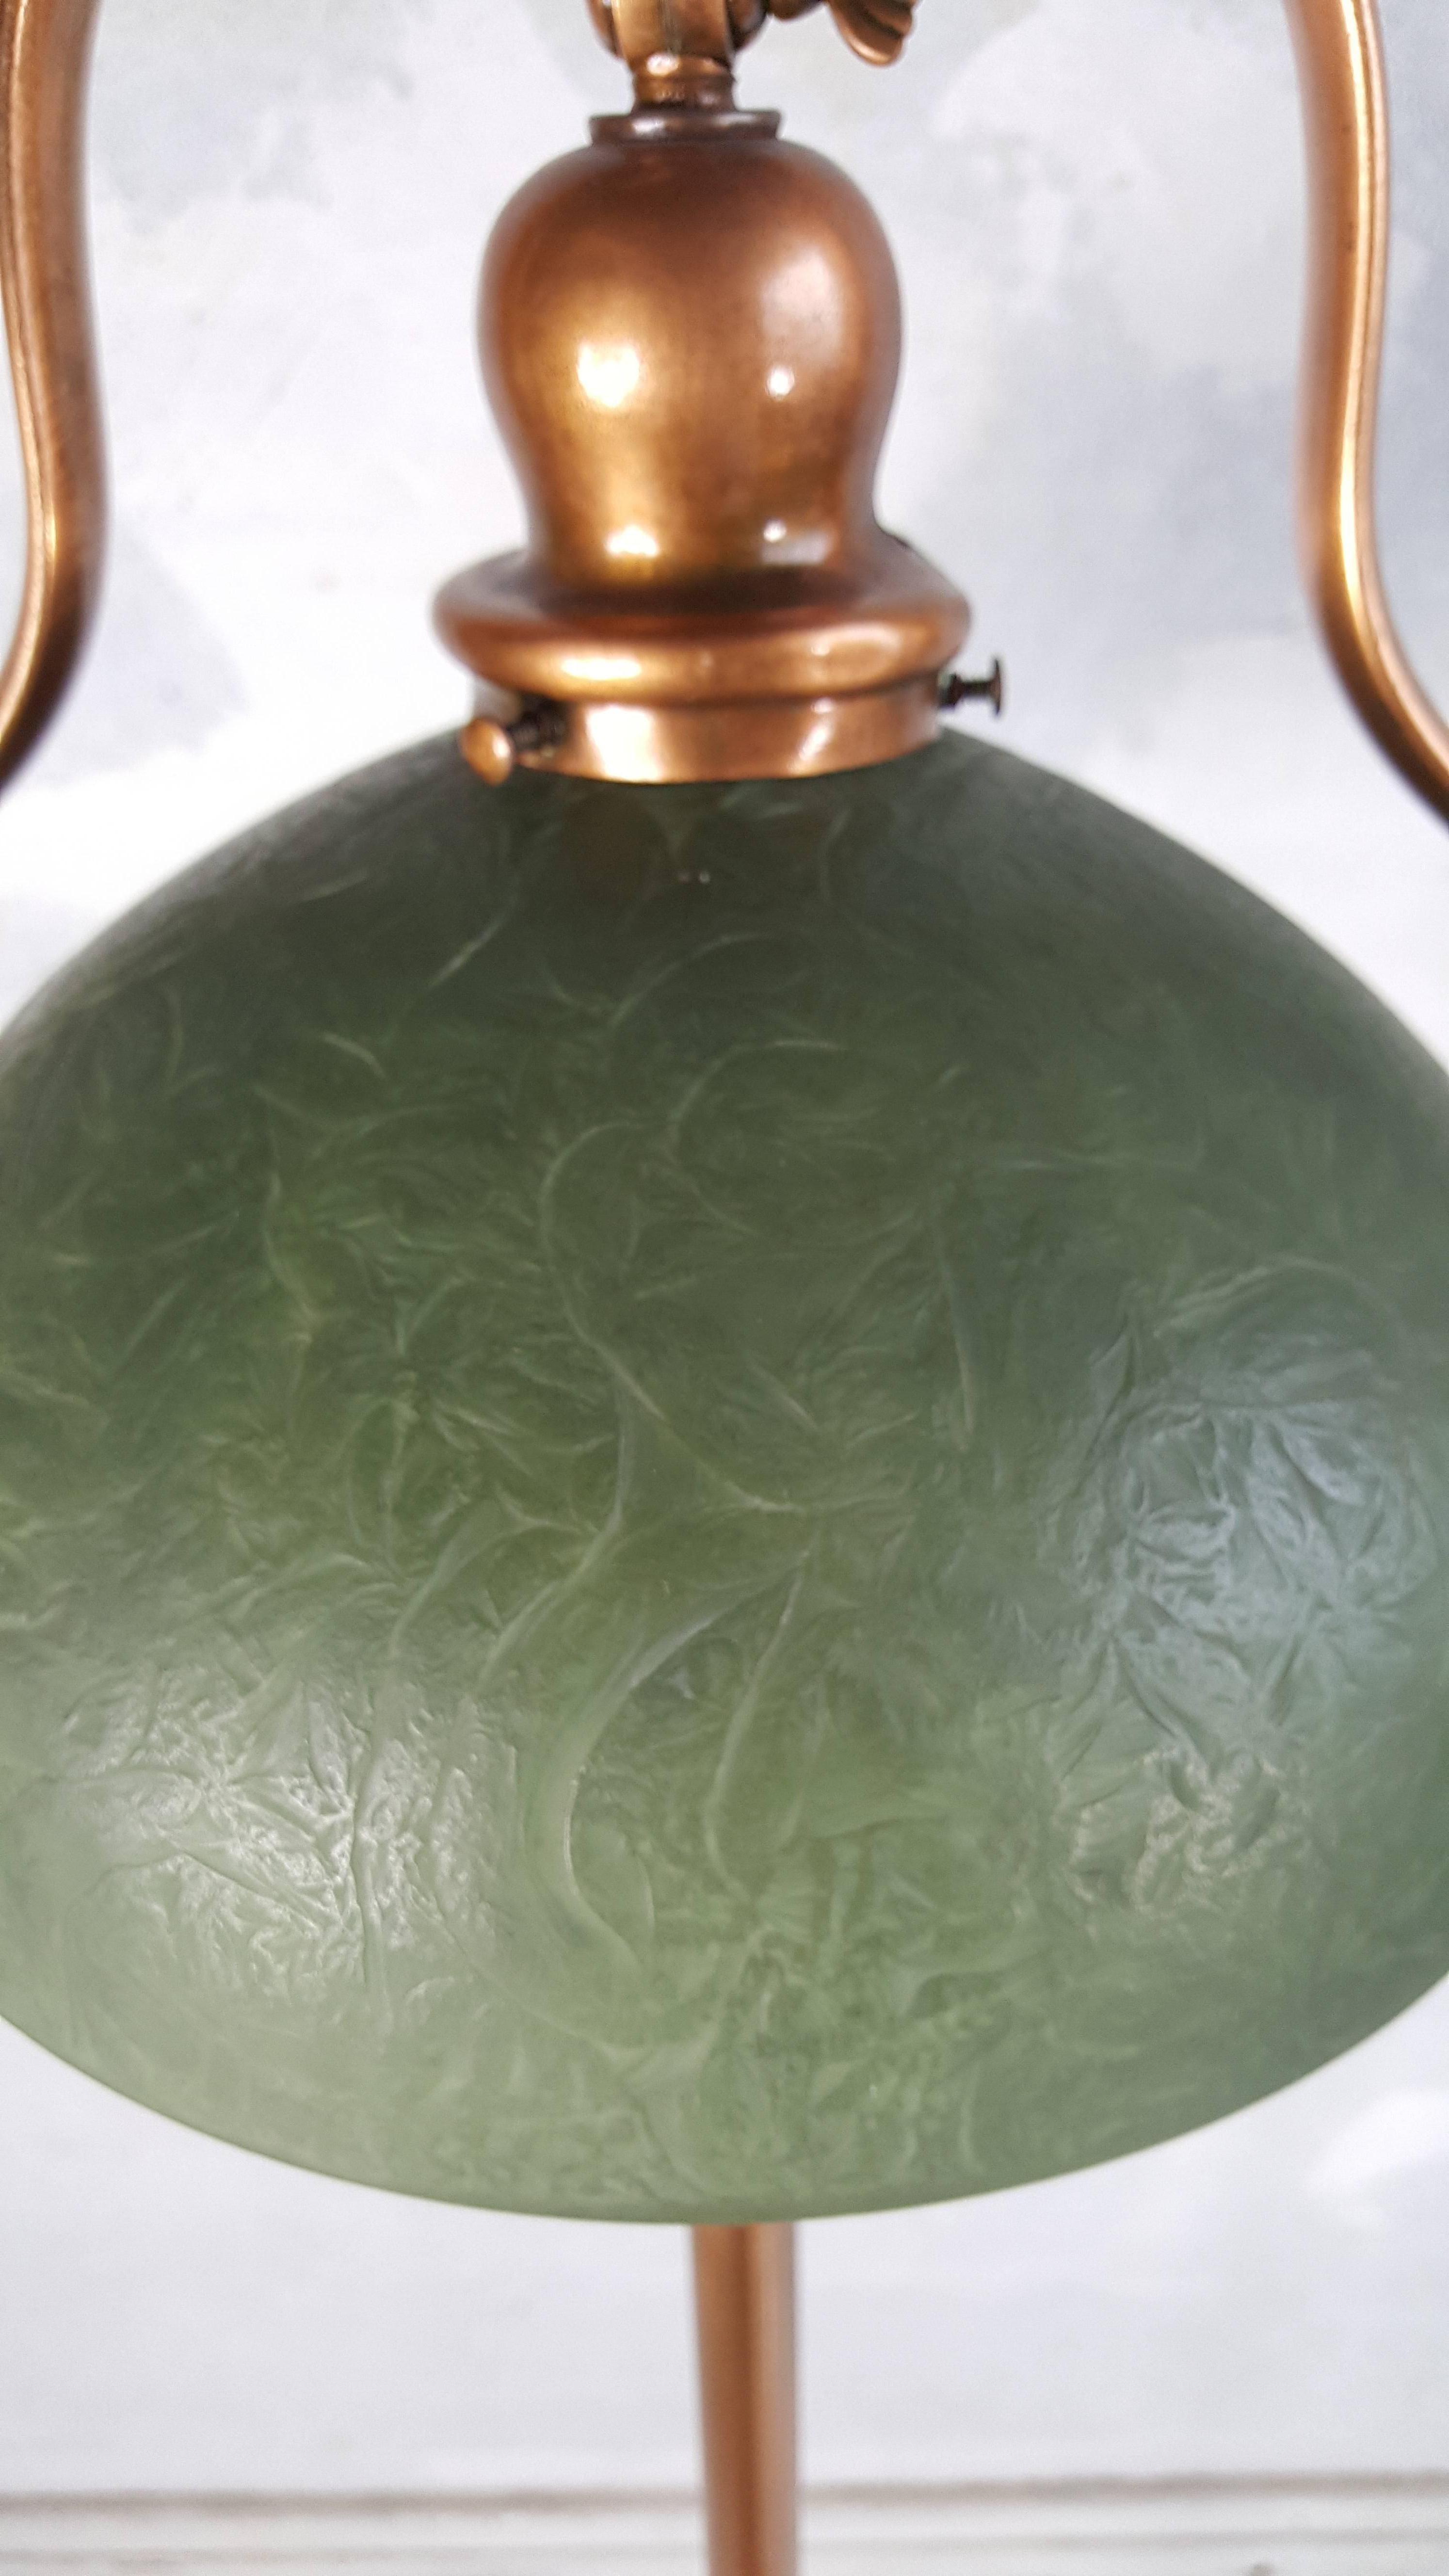 Classic form. Turn of the century copperd bronze handle floor lamp. Retains original Mosserine shade. Wonderful matte green color. Beautiful golden glow when lit.